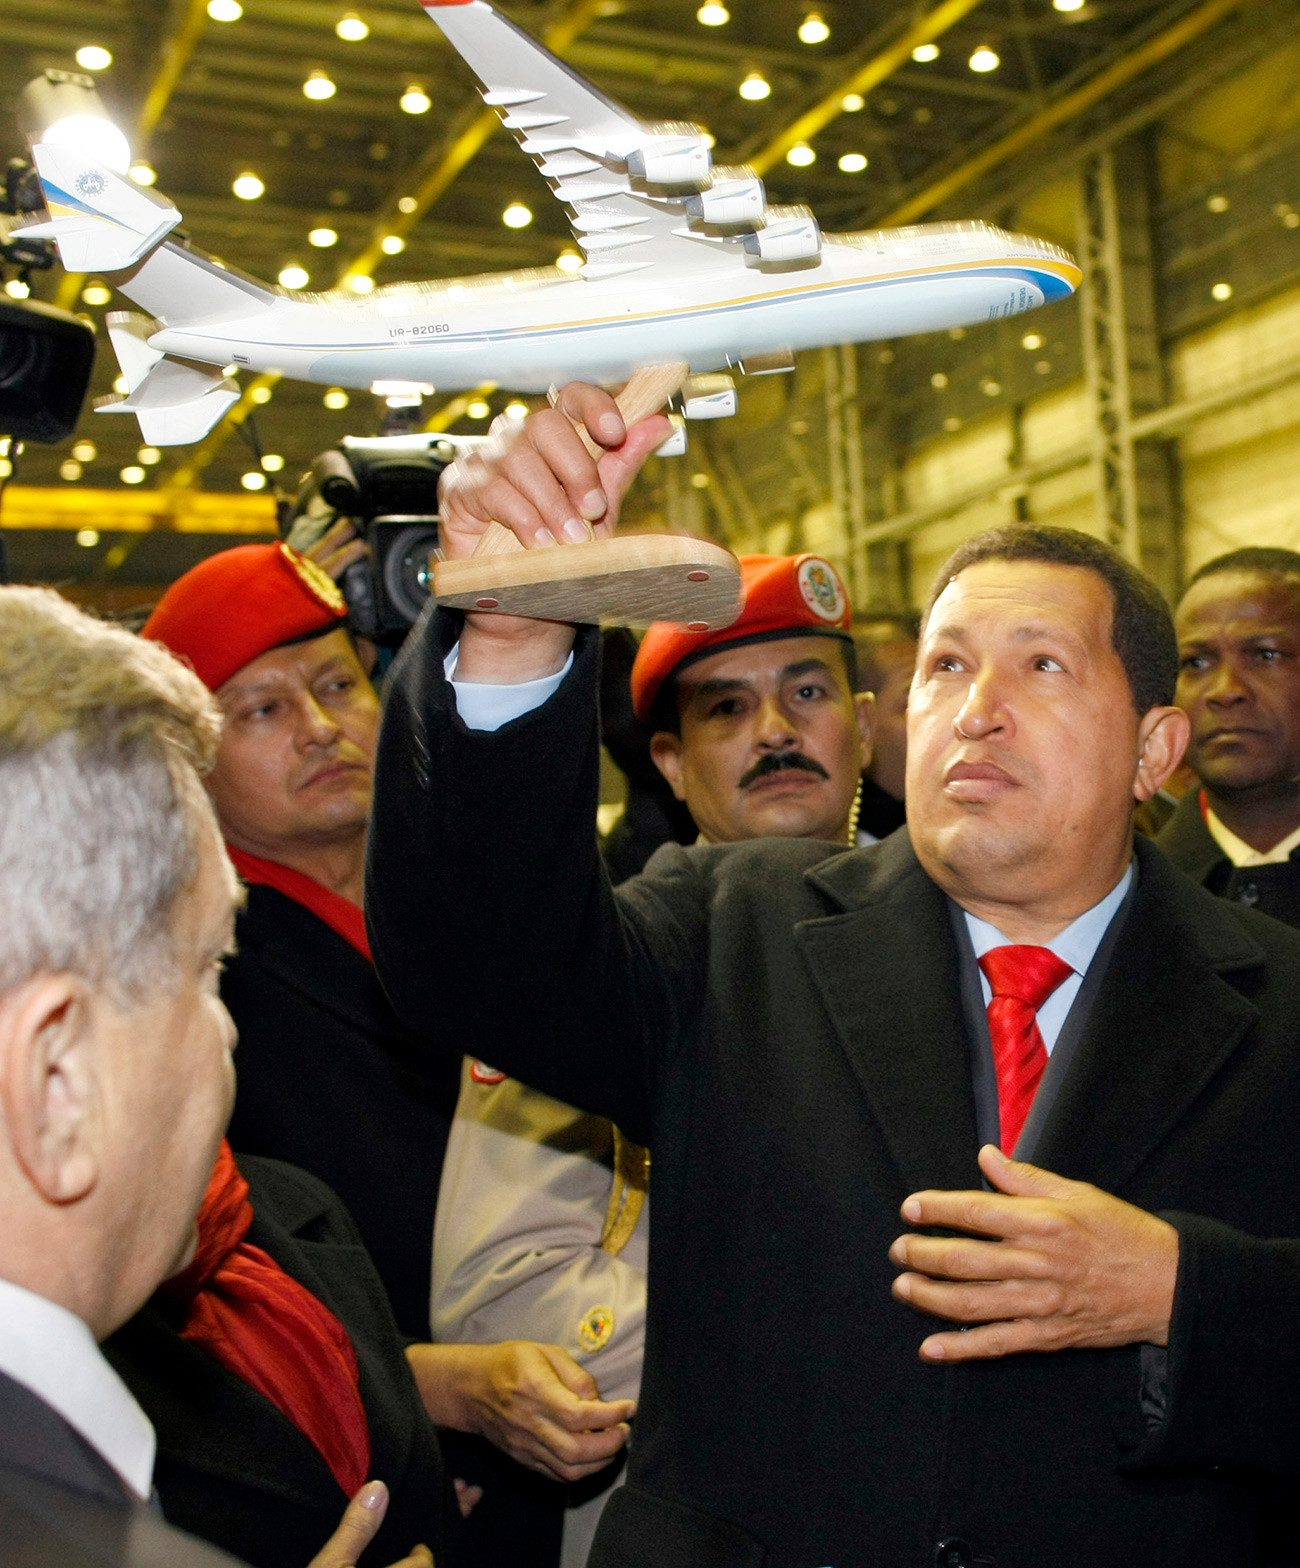 This photo taken on October 18, 2010 shows Venezuela President Hugo Chavez (R) holding up a model of the Antonov An-225 Mriya plane during his visit to the Antonov plant in Kiev.